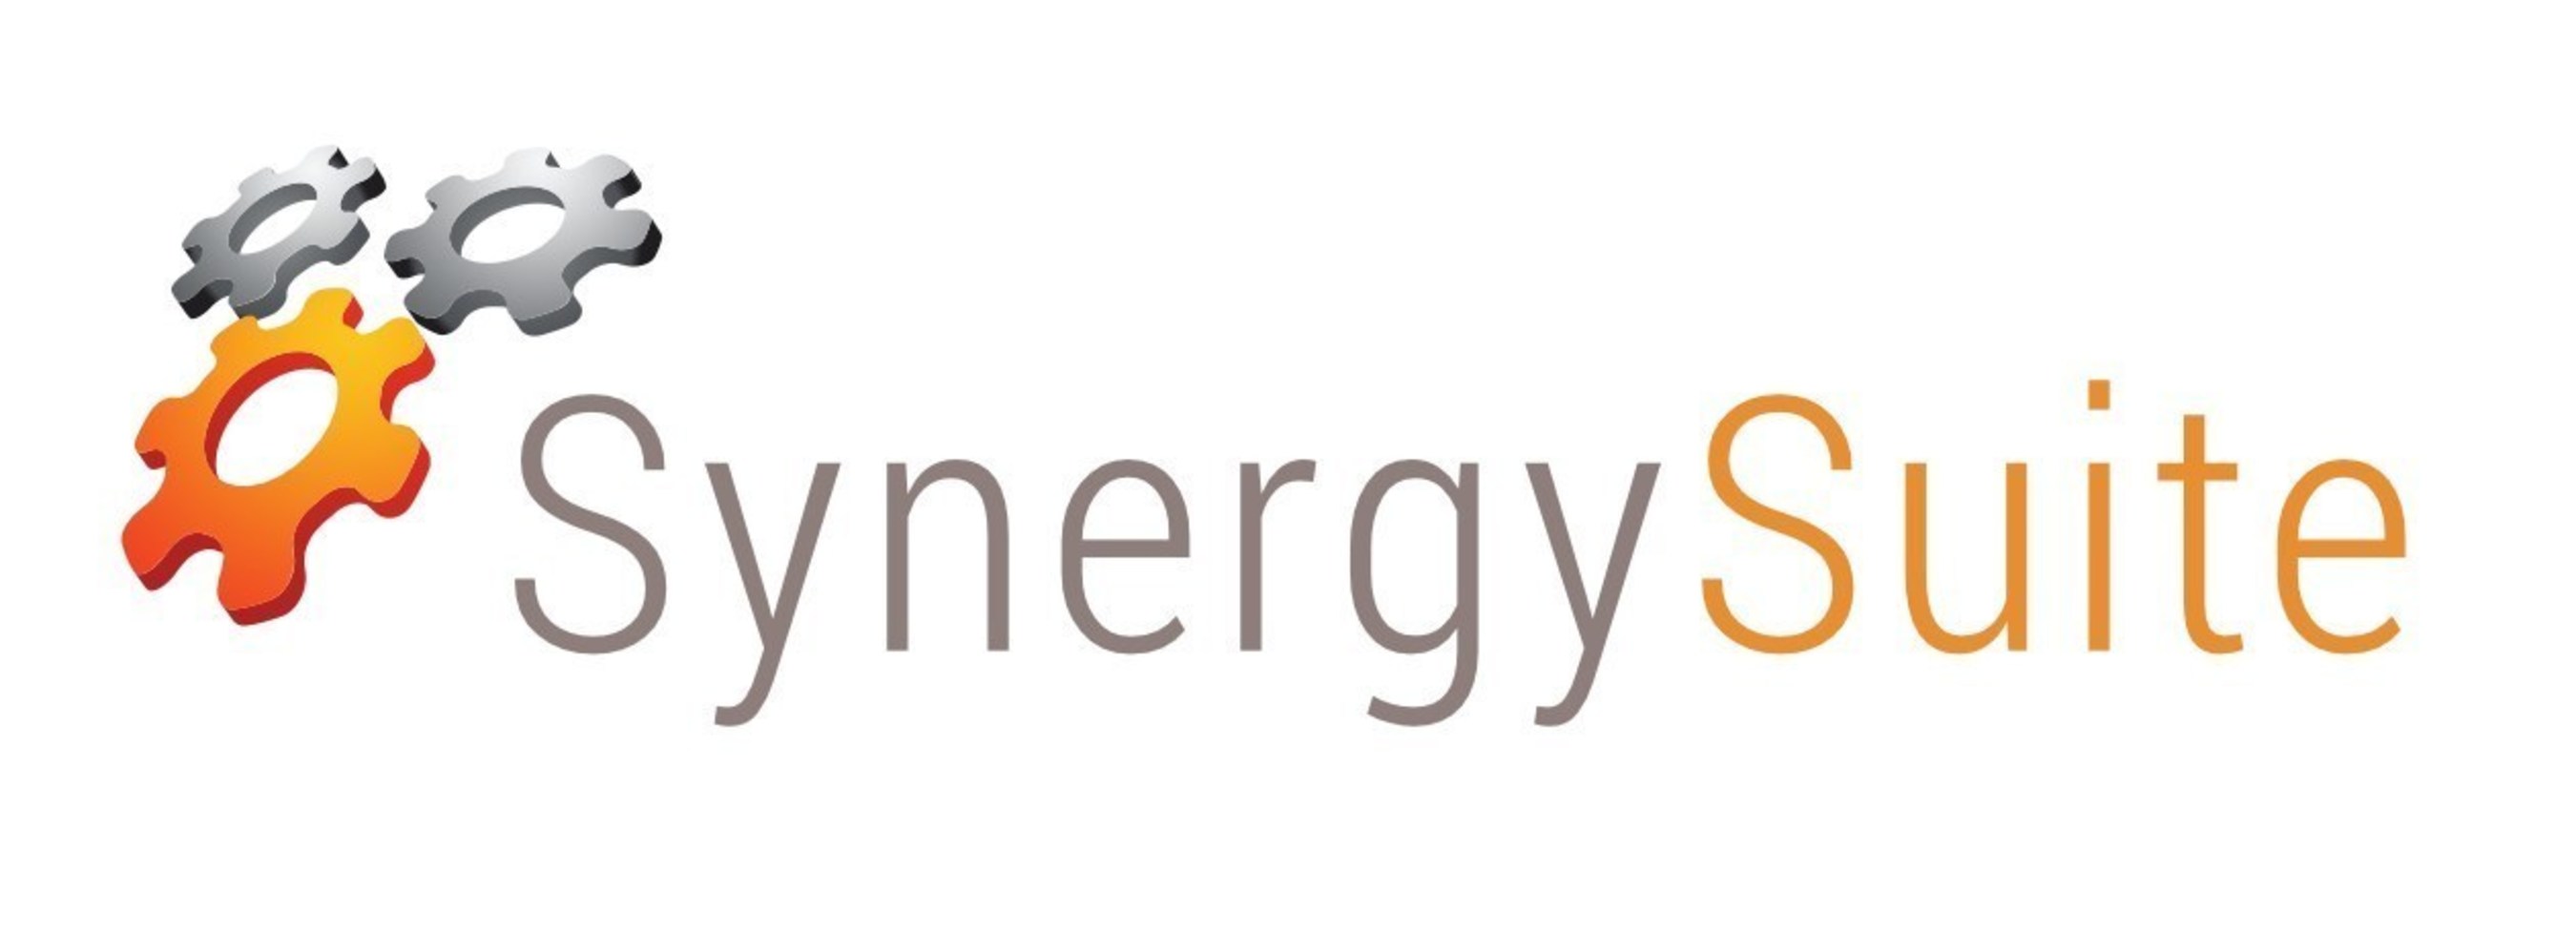 SynergySuite Logo